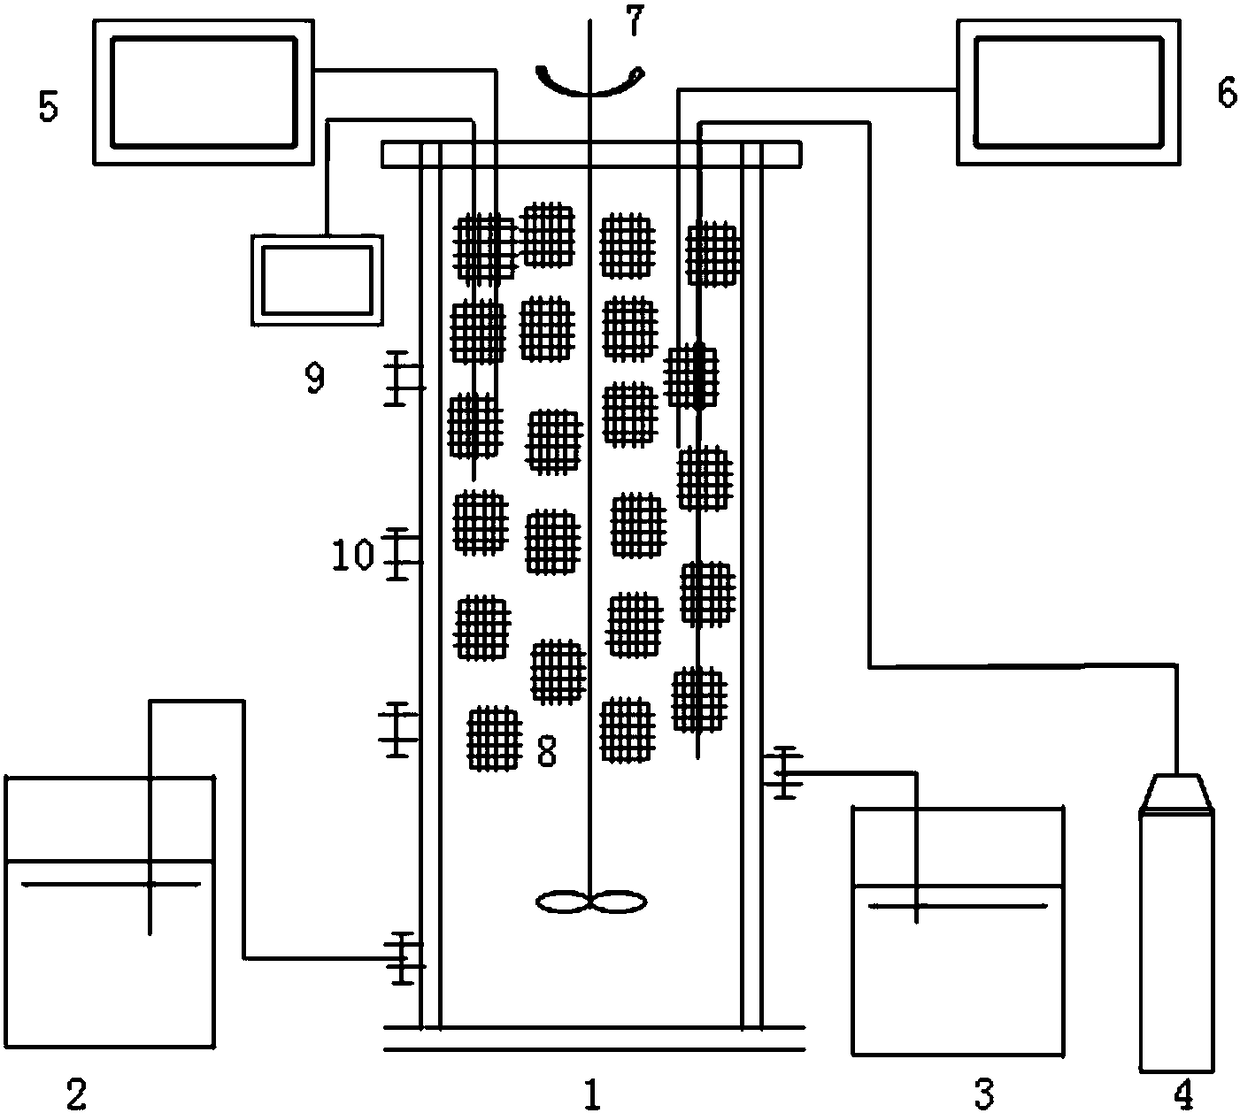 Method for enriching high density anaerobic ammonia oxidizing bacteria in sewage nitrogen removing system